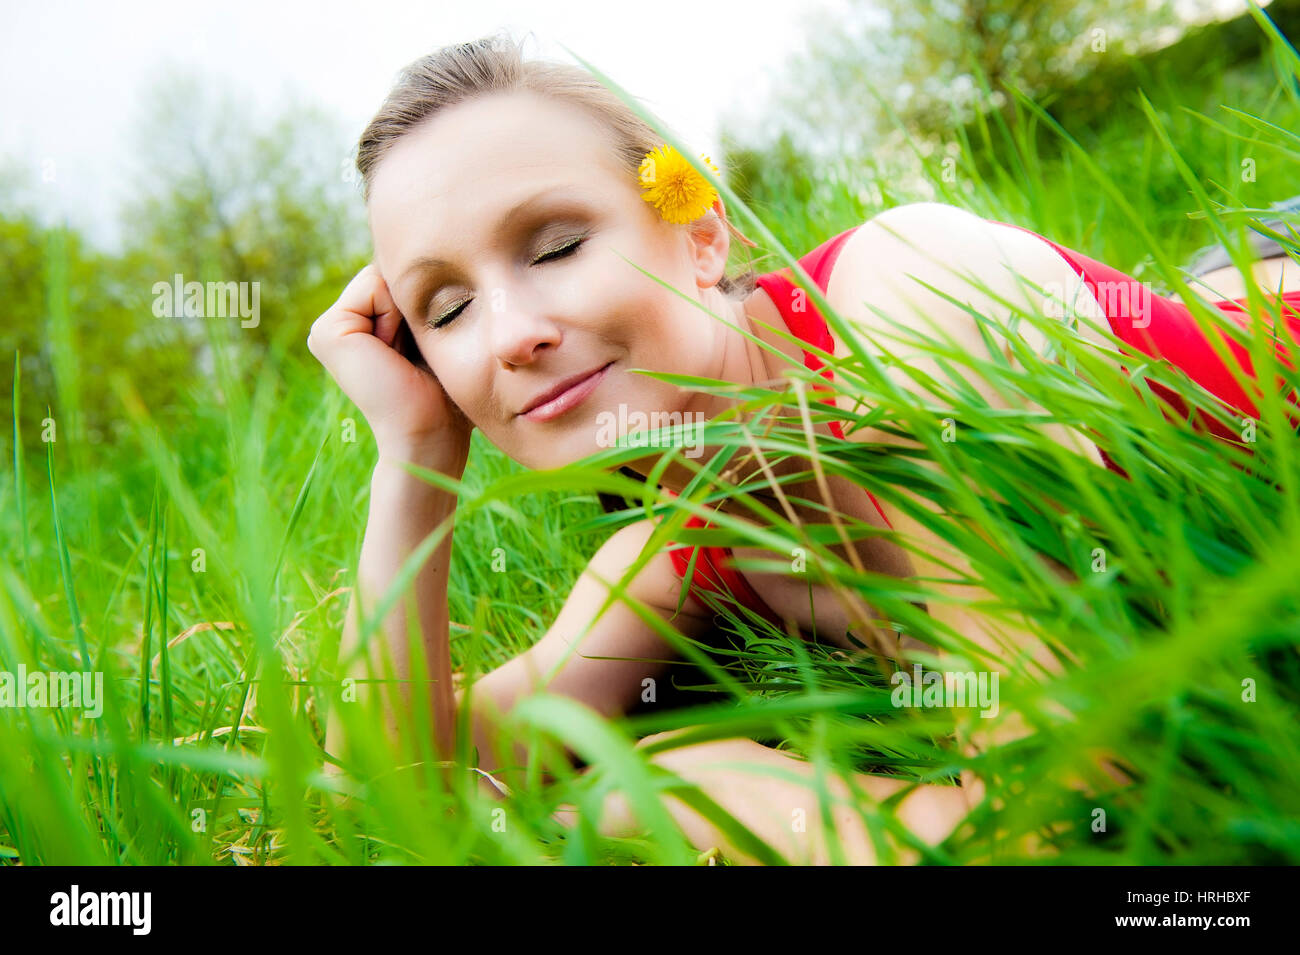 Model released, Junge Frau liegt entspannt in Fruehlingswiese - woman relaxing in a spring meadow Stock Photo